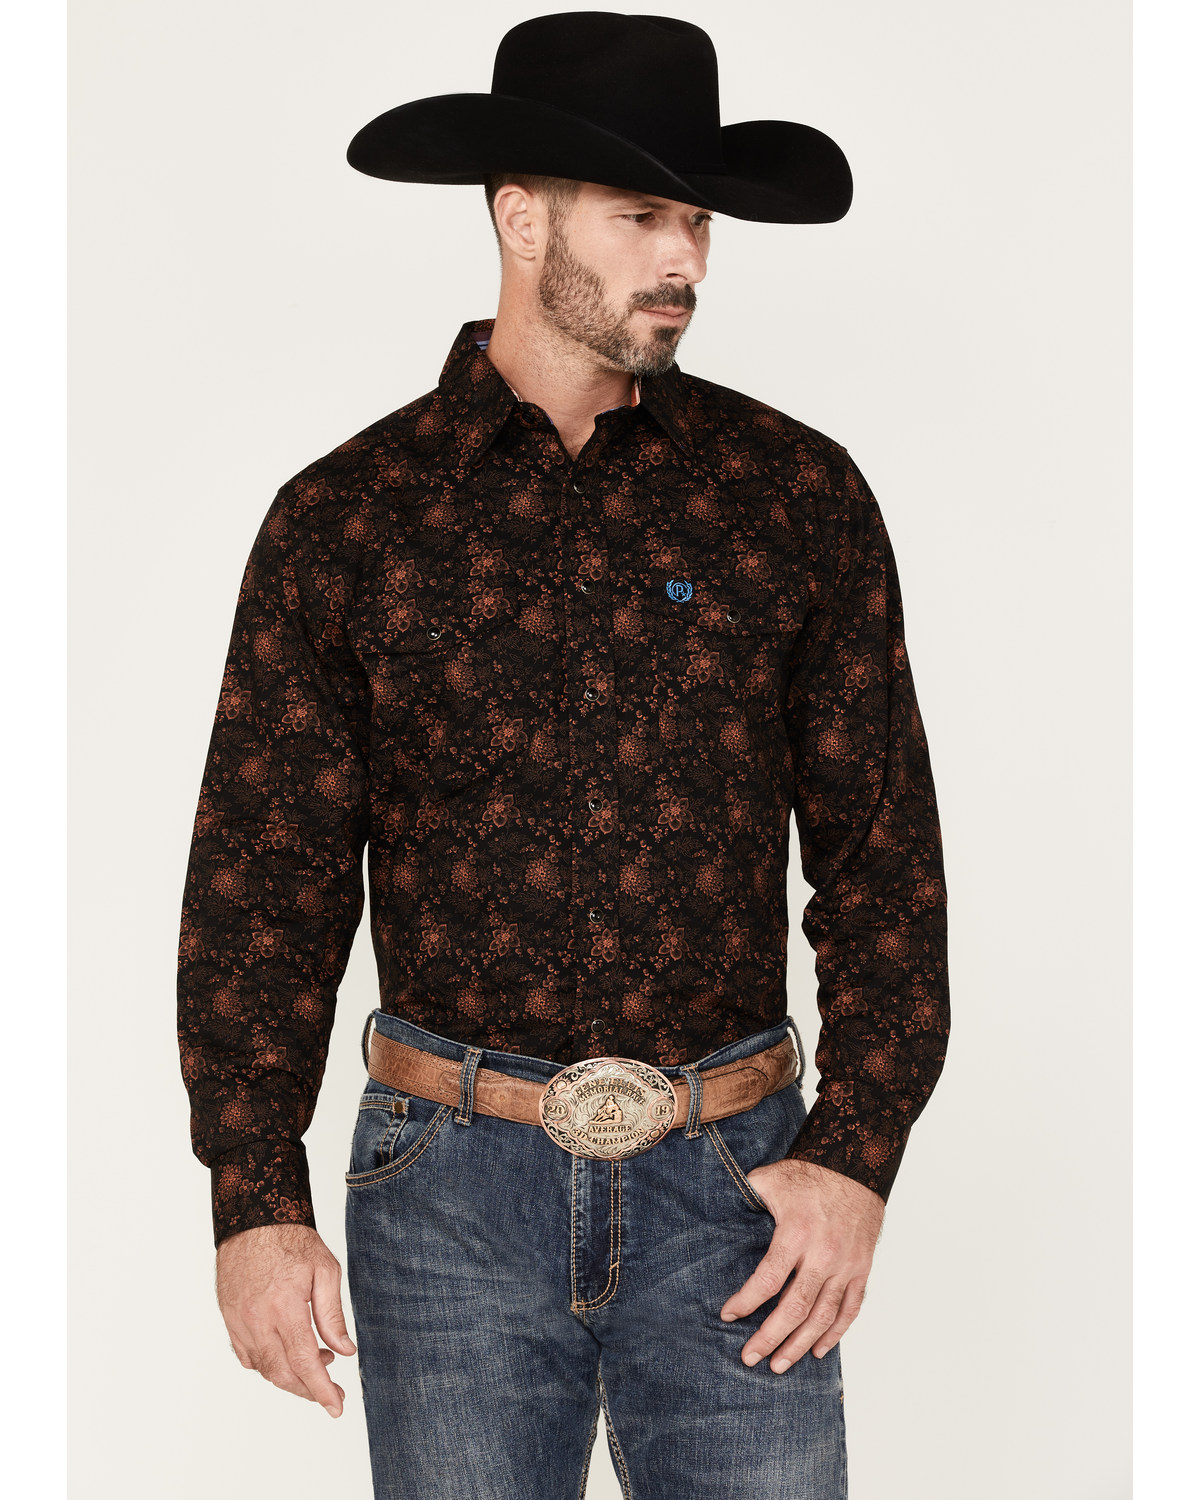 Panhandle Select Men's Floral Print Long Sleeve Snap Western Shirt